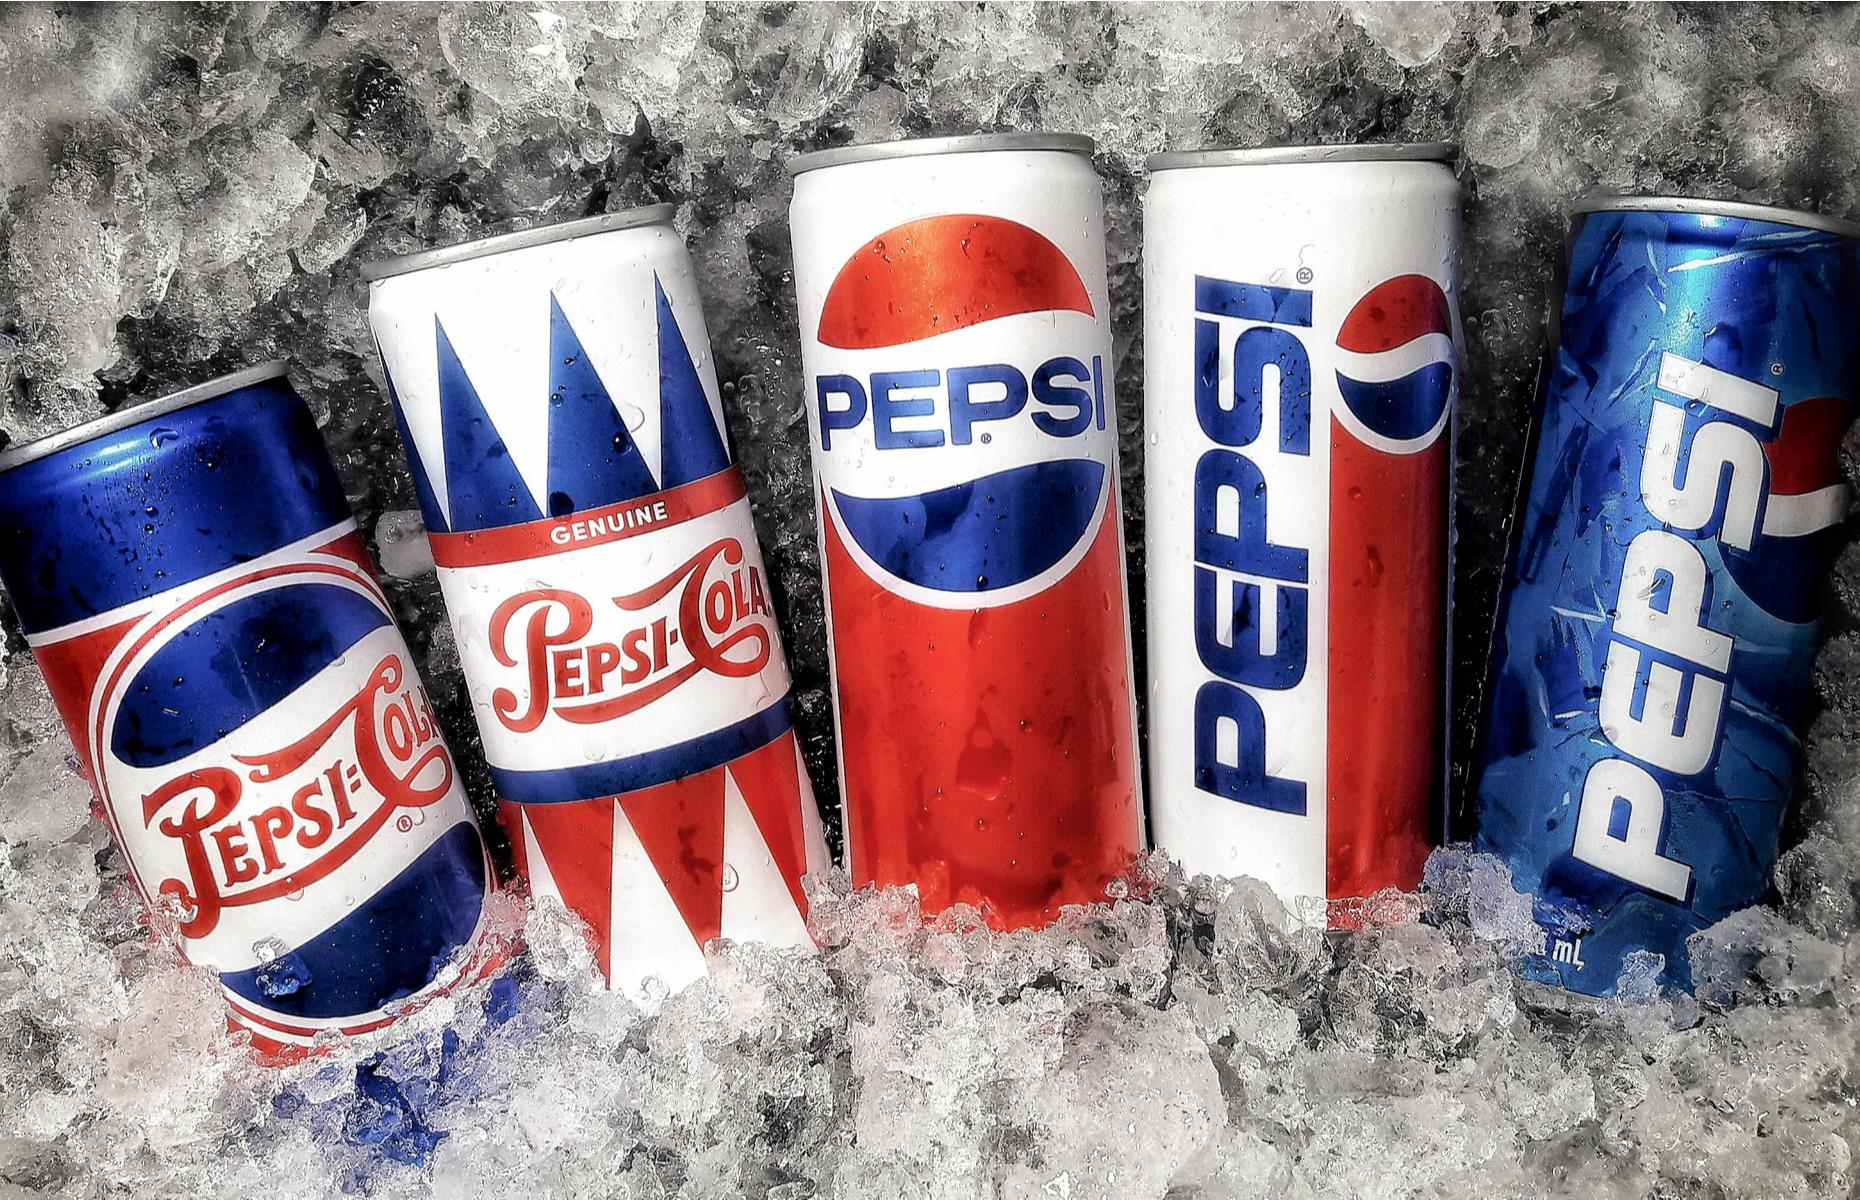 Pepsi’s blue rebrand (1996)